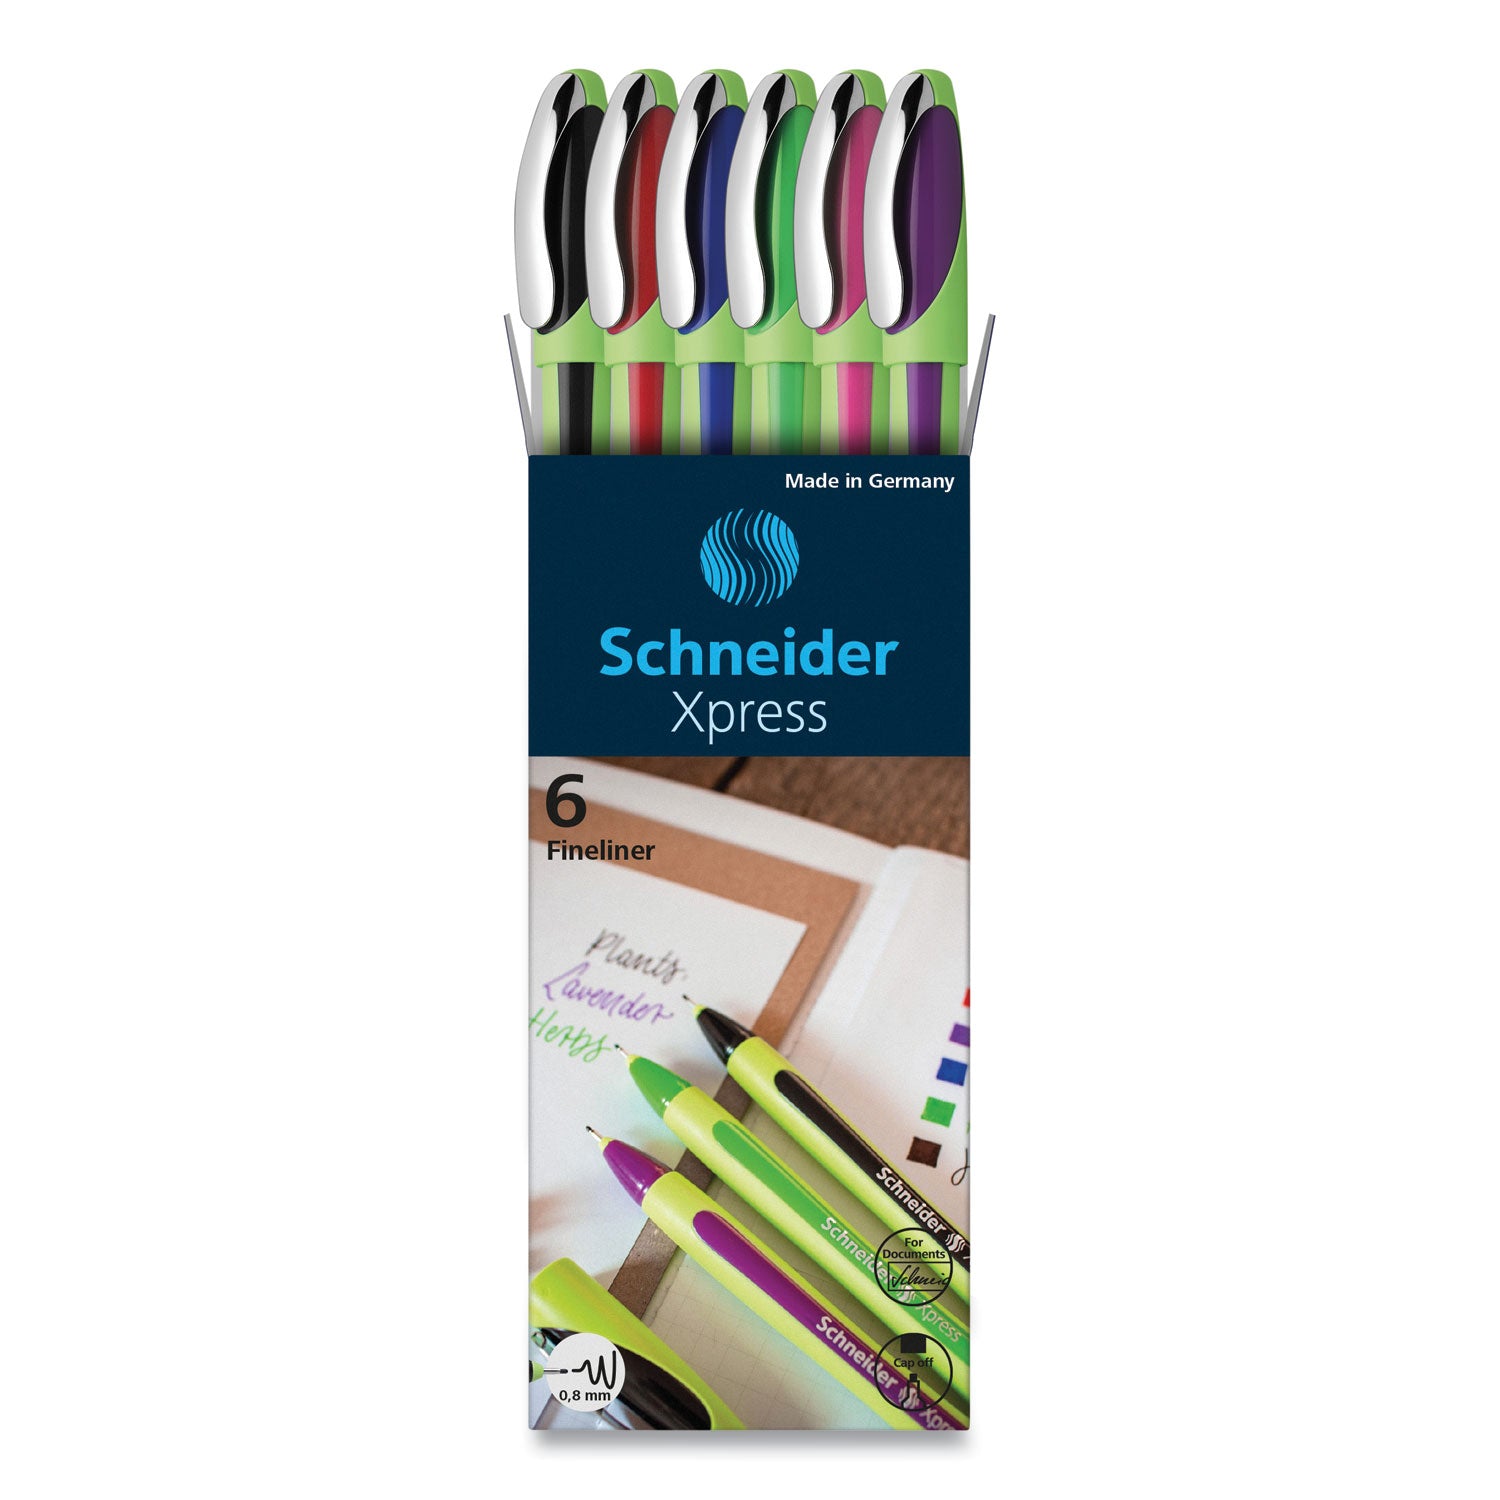 xpress-fineliner-pen-stick-fine-08-mm-assorted-ink-and-barrel-colors-6-pack_red190086 - 1